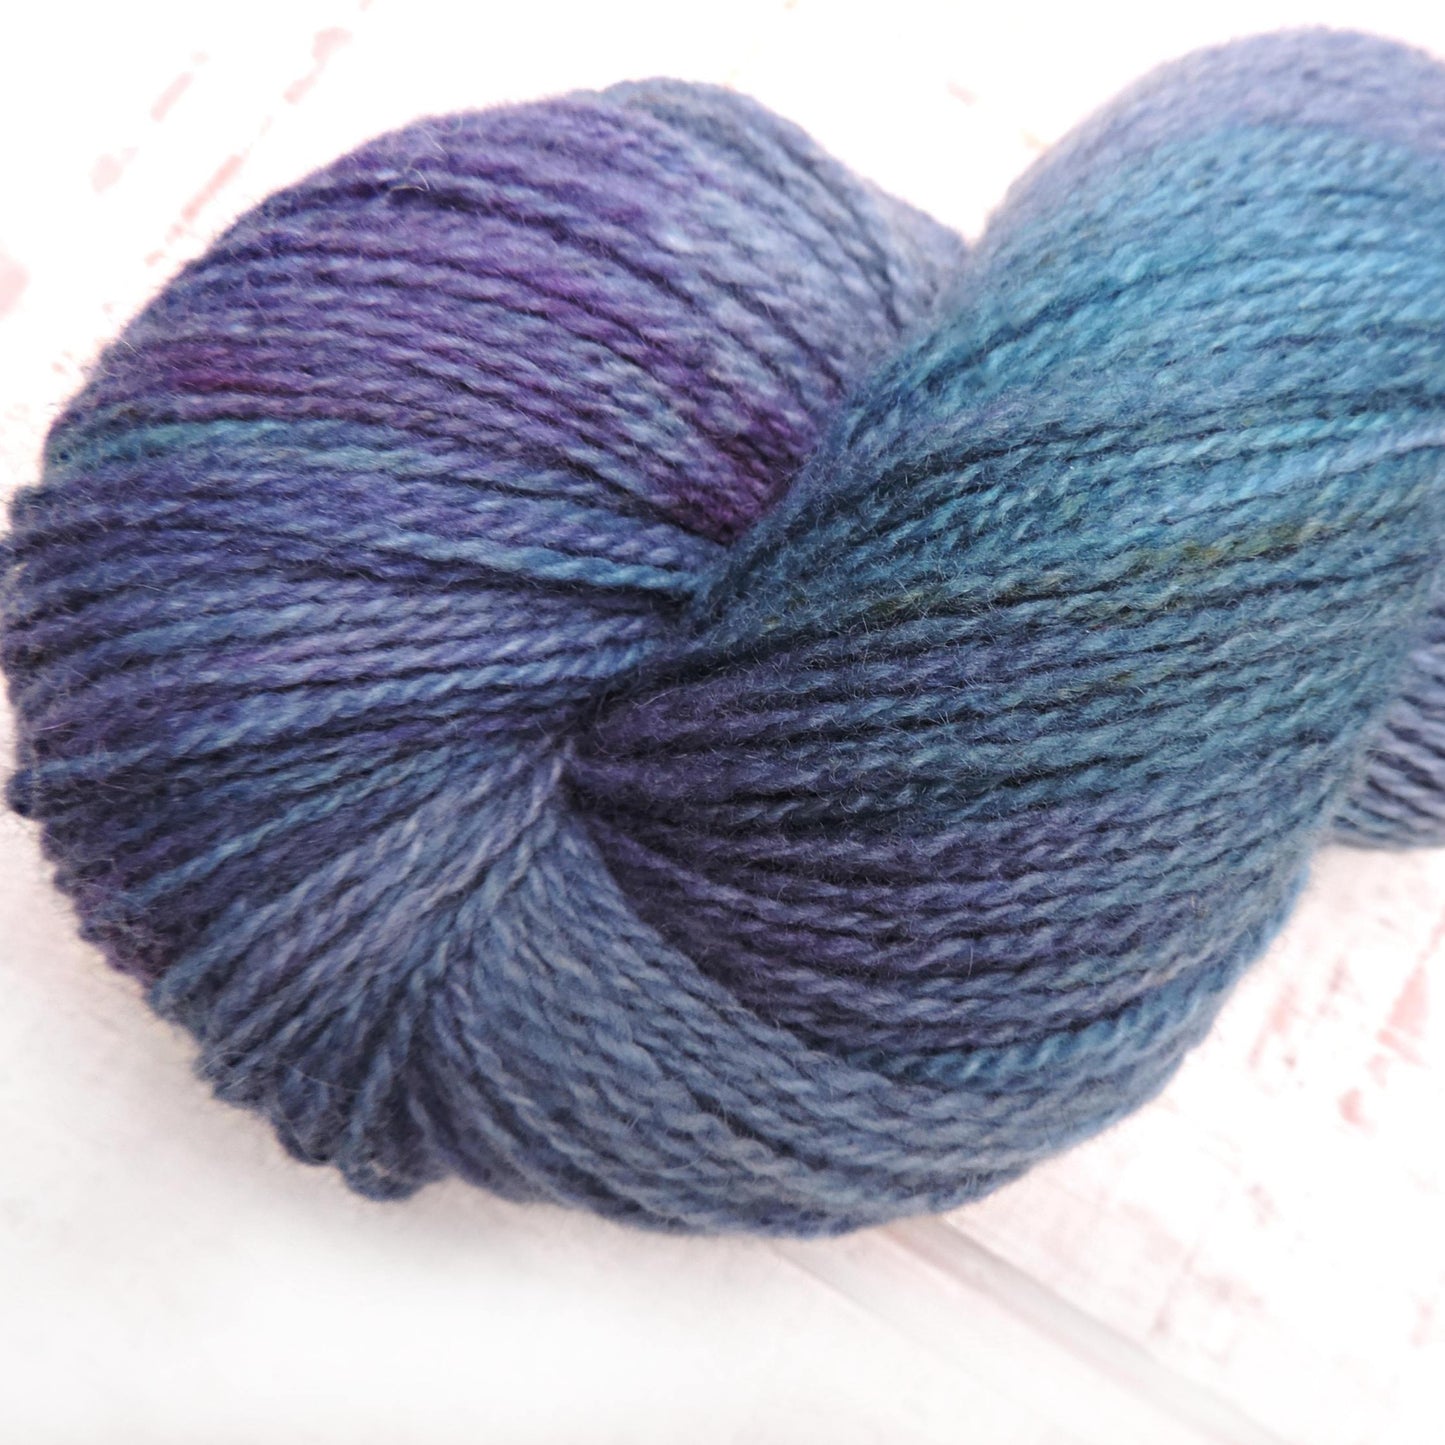 Cosmic Space - Trollfjord Sock - Variegated Yarn - Hand dyed yarn